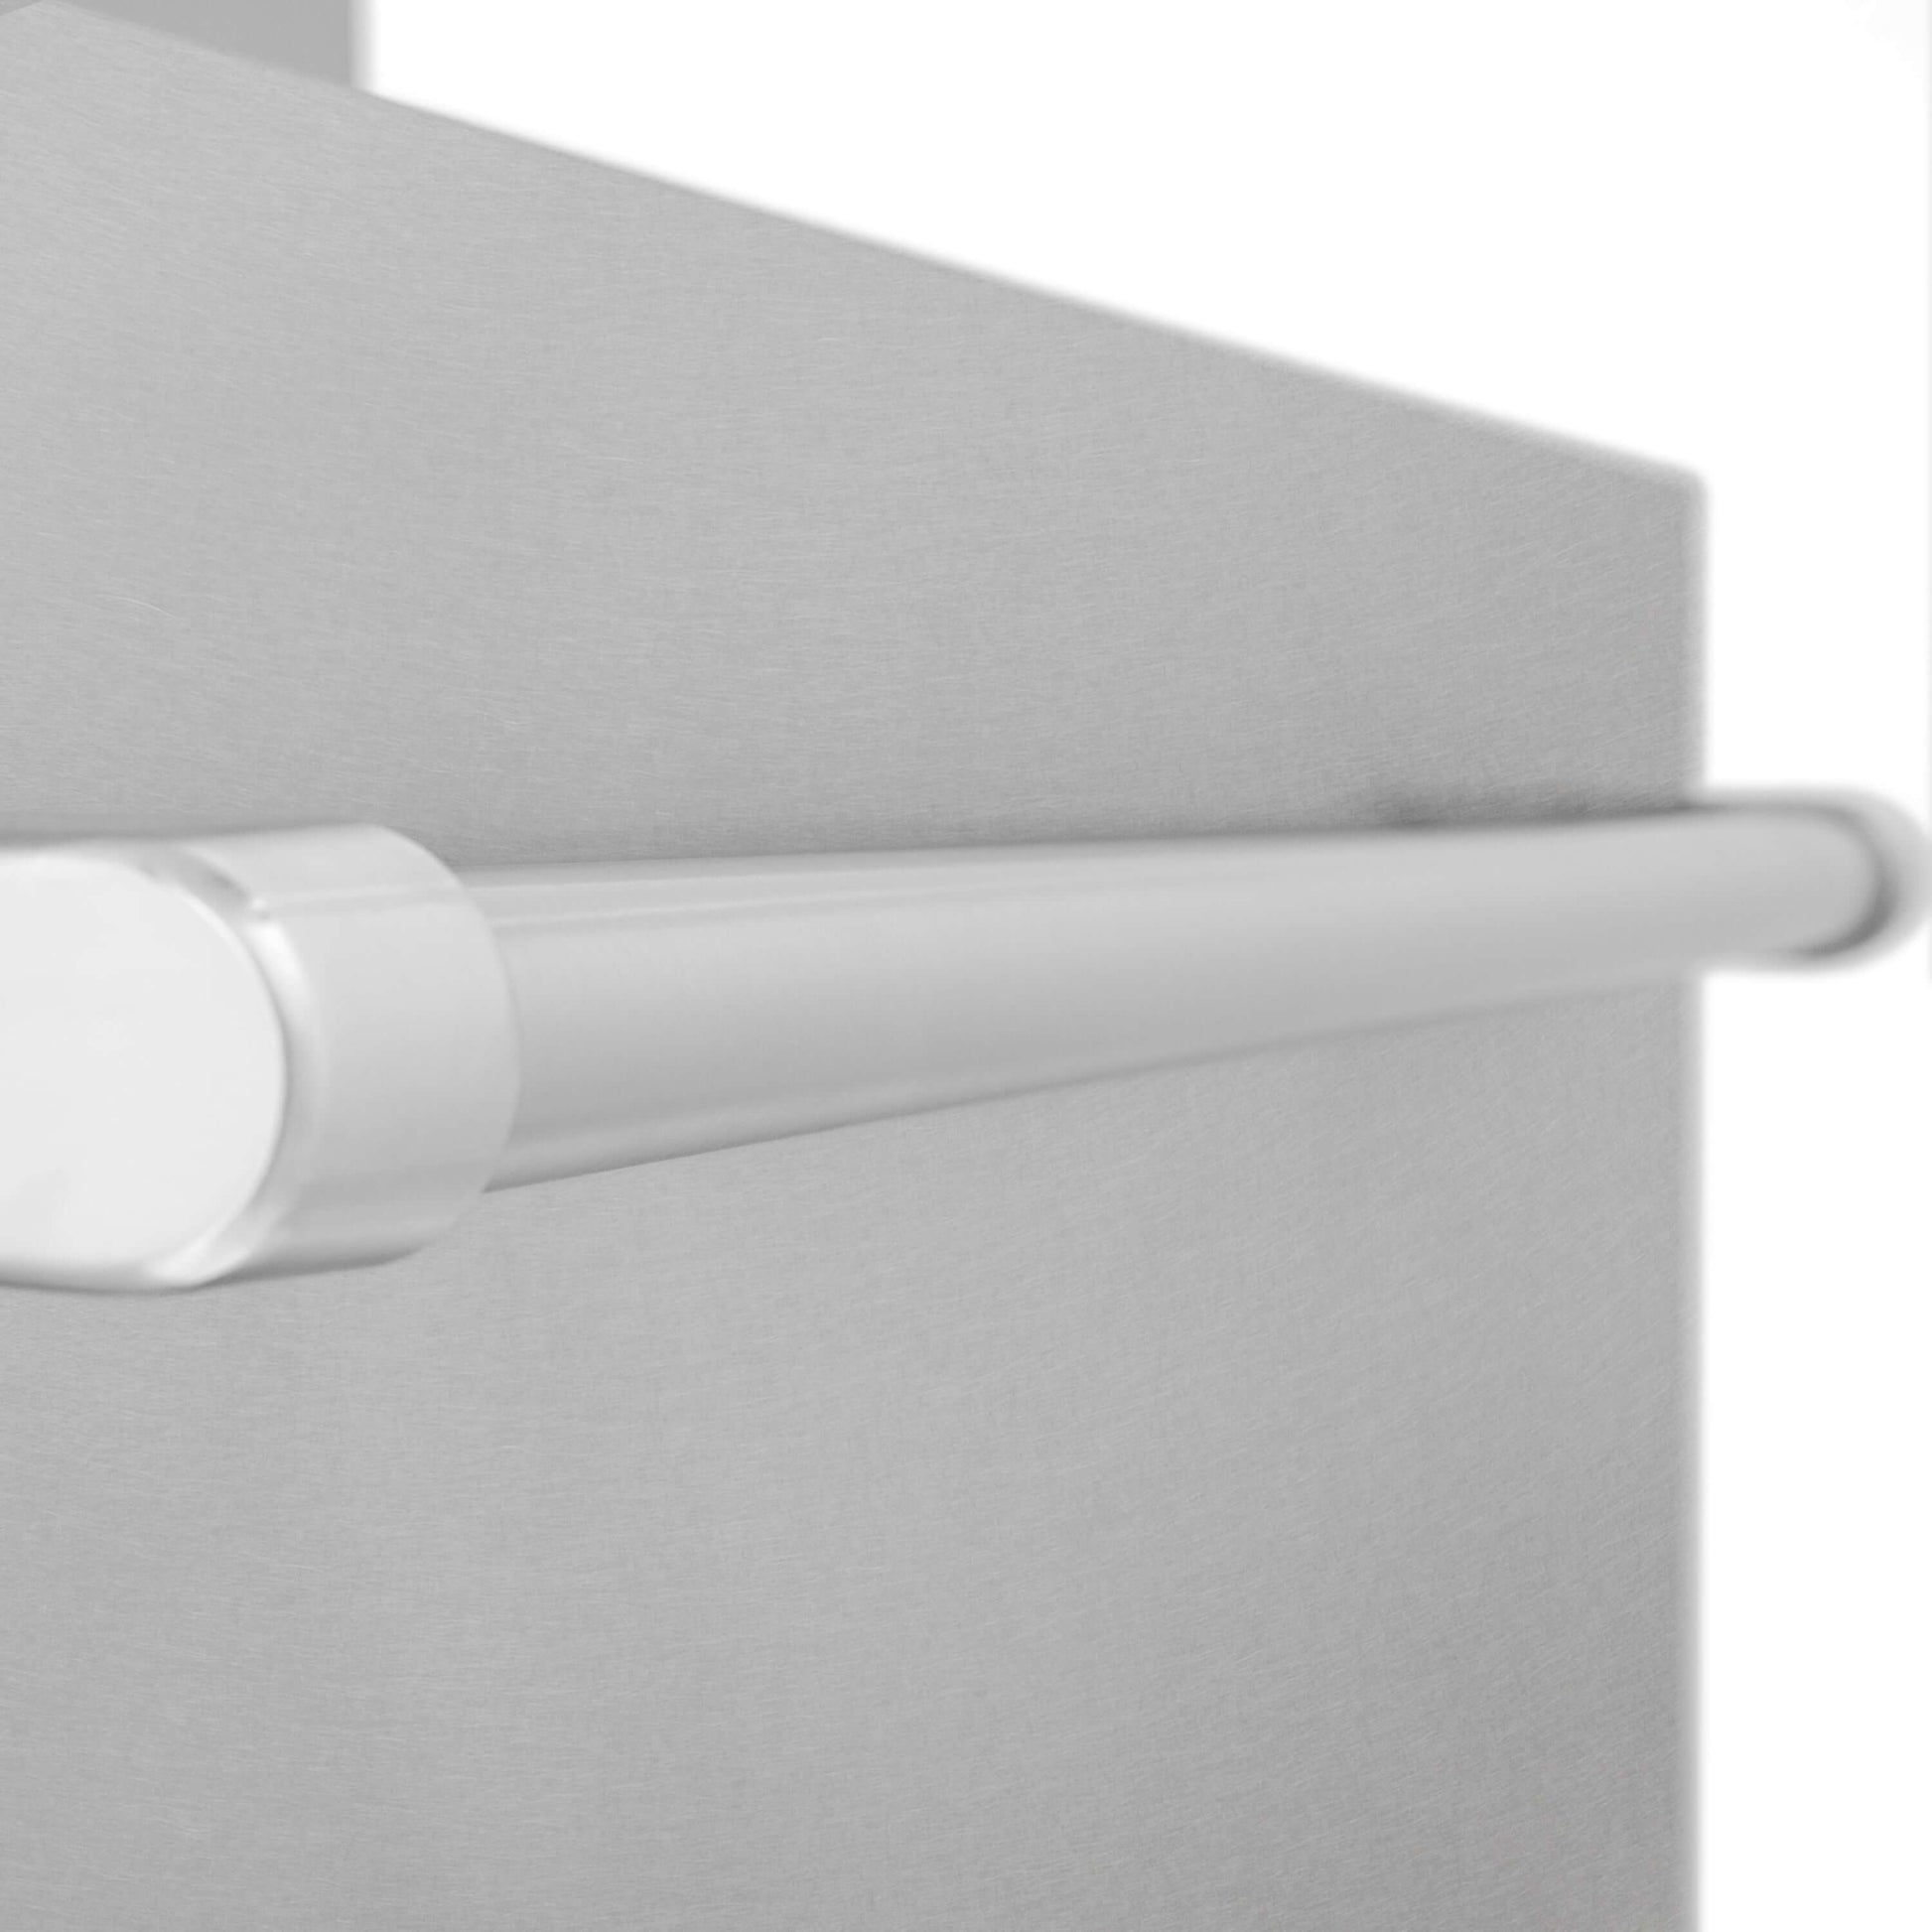 Panels & Handles Only - ZLINE 30" Refrigerator Panels in DuraSnow Stainless Steel